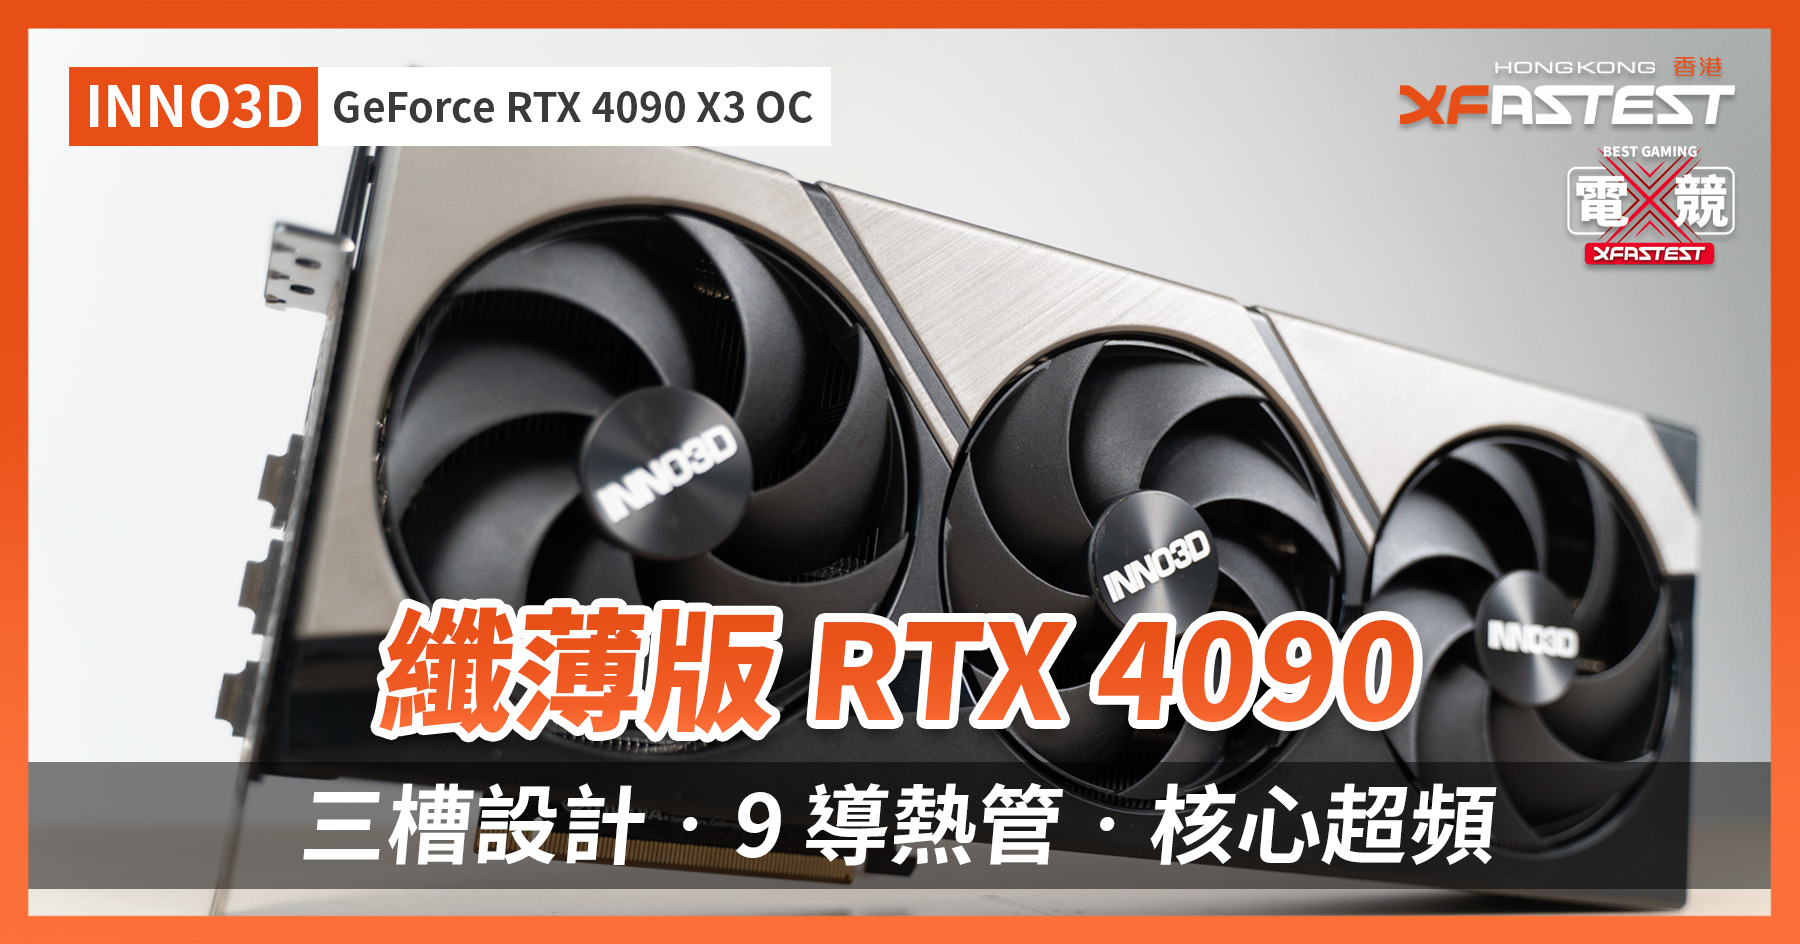 XF 開箱] 纖薄版RTX 4090 三槽設計‧9 導熱管‧核心超頻INNO3D GeForce 